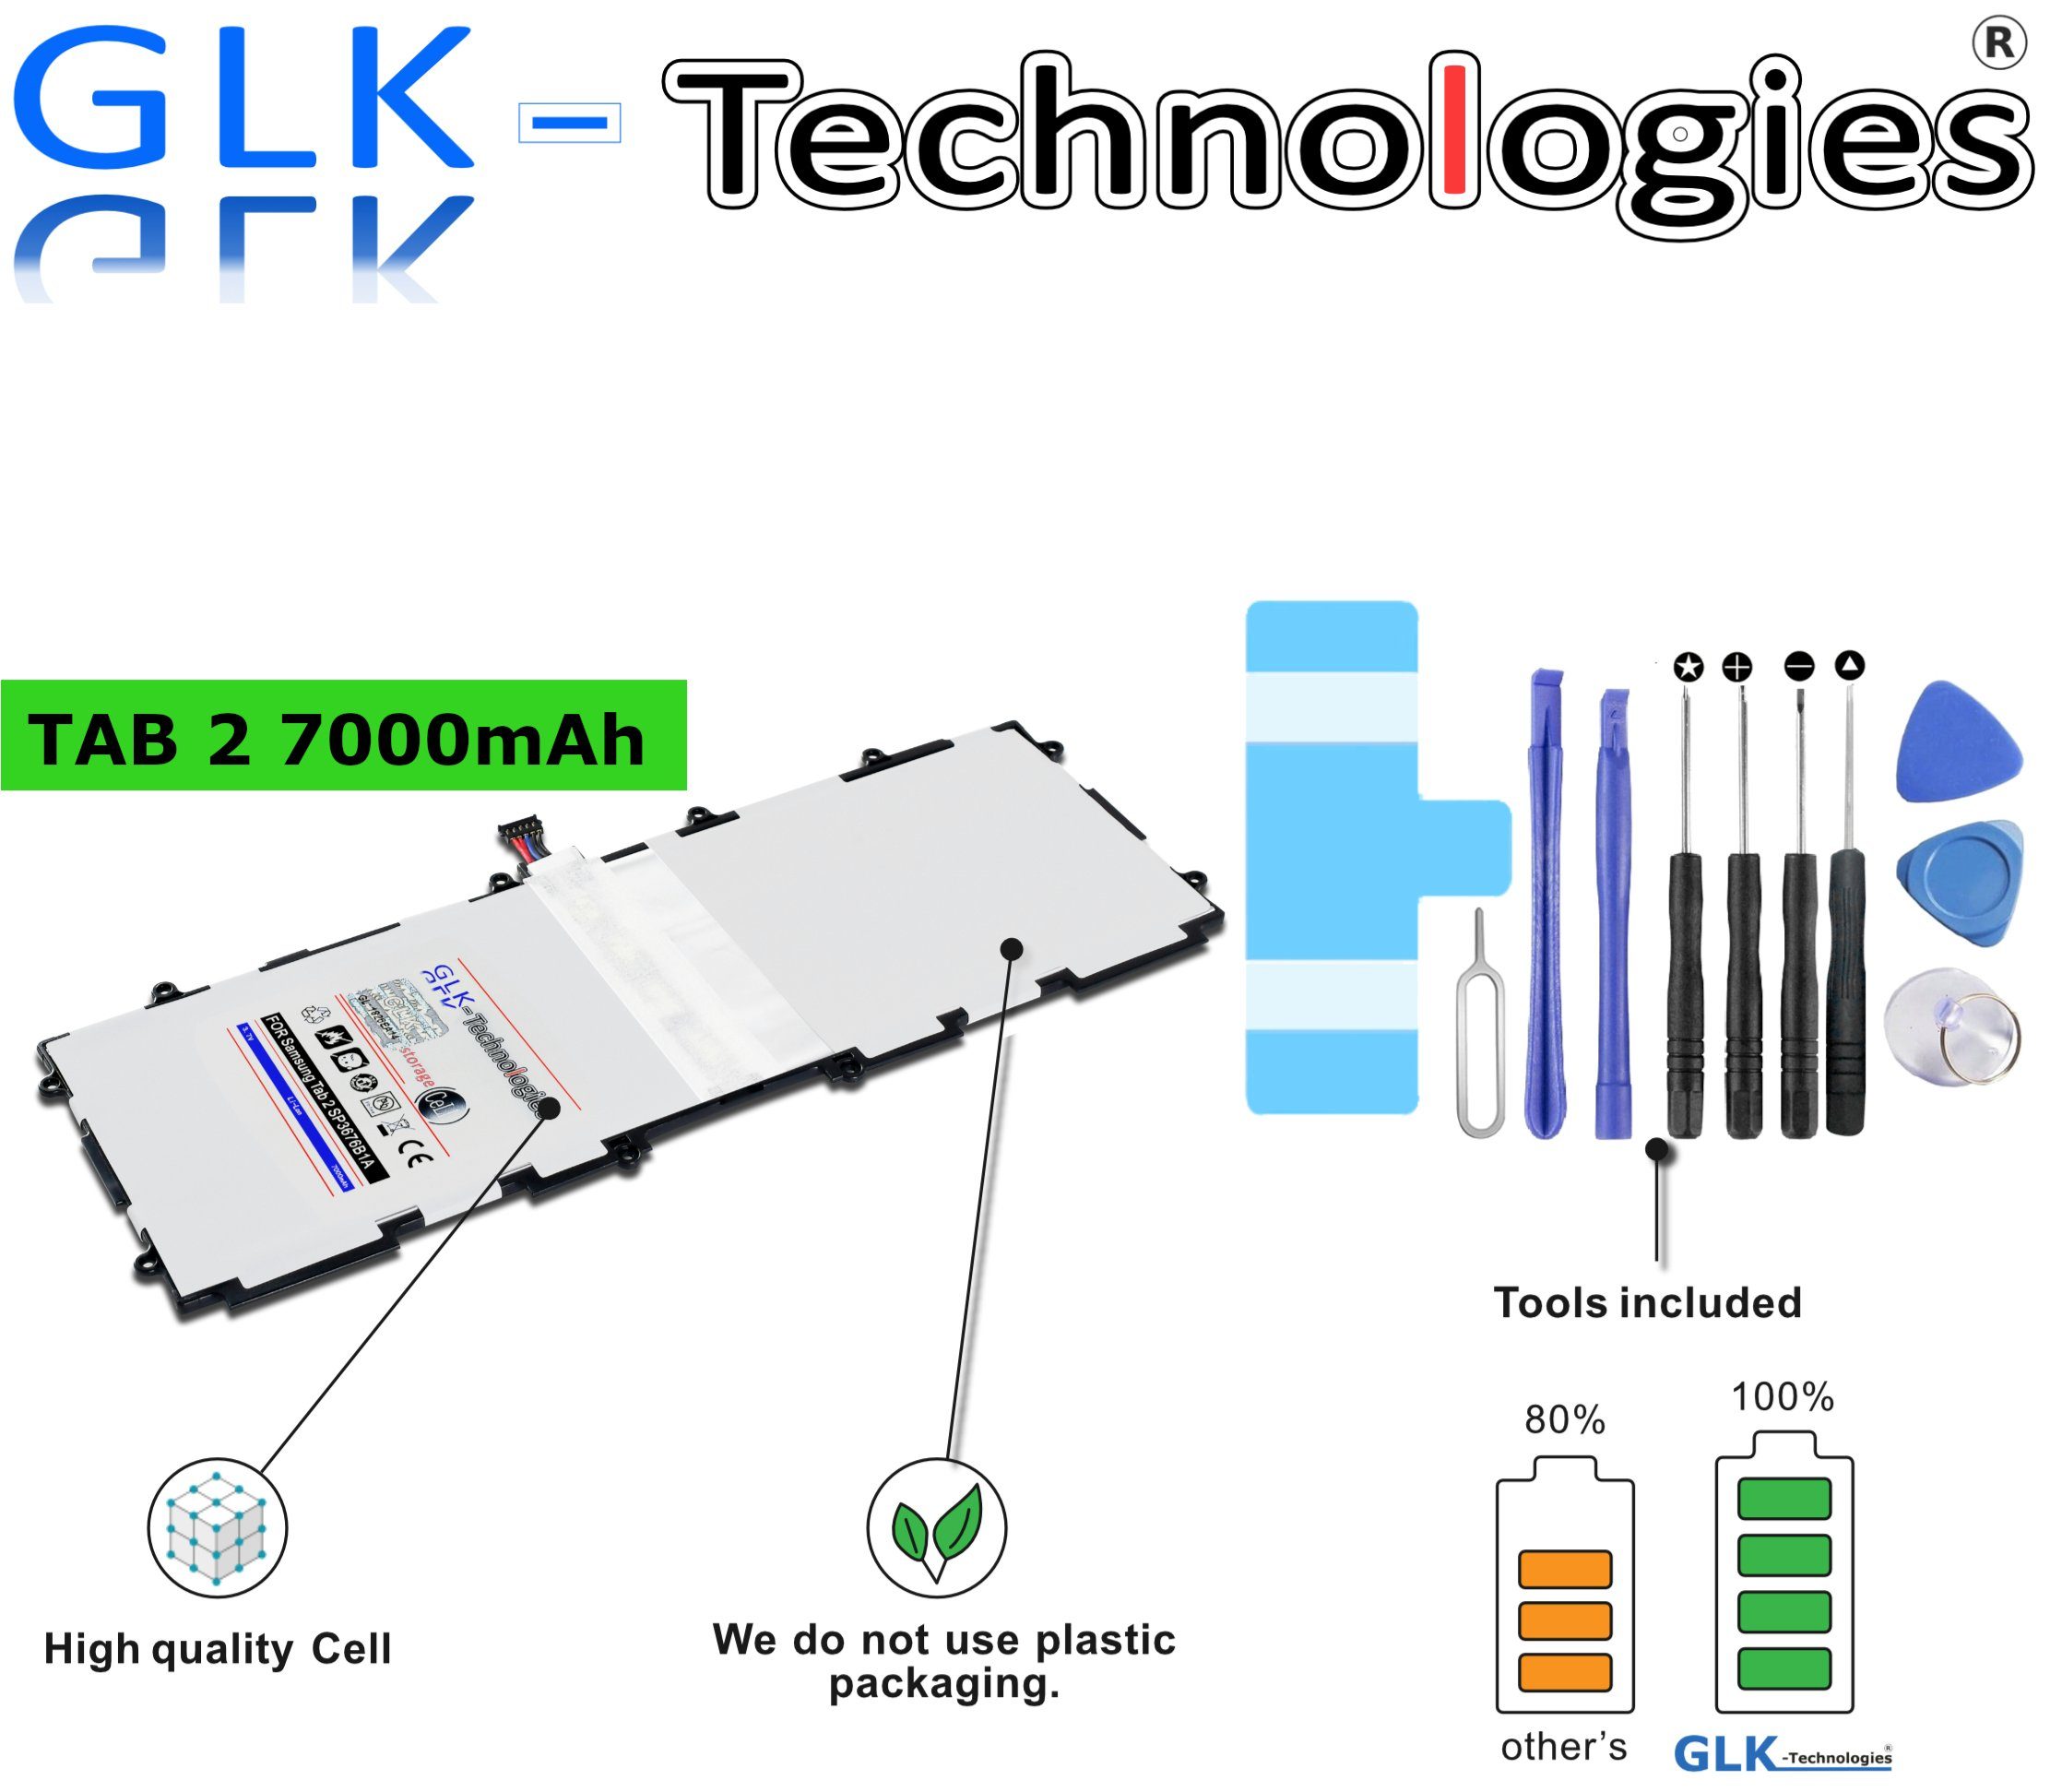 GLK-Technologies SP3676B1A, Kit Akku, 10.1" GT-P5100 GT-N8000 GLK-Technologies GT-N8010 Ersatzakku Tab + 7000 Tablet-Akku Samsung accu, (3.8 7000 mAh 2 mAh GT-P5110 Set Werkzeug Battery, SCH-i905 GT-P7500 Galaxy V) Original GT-7511 GT-P7510